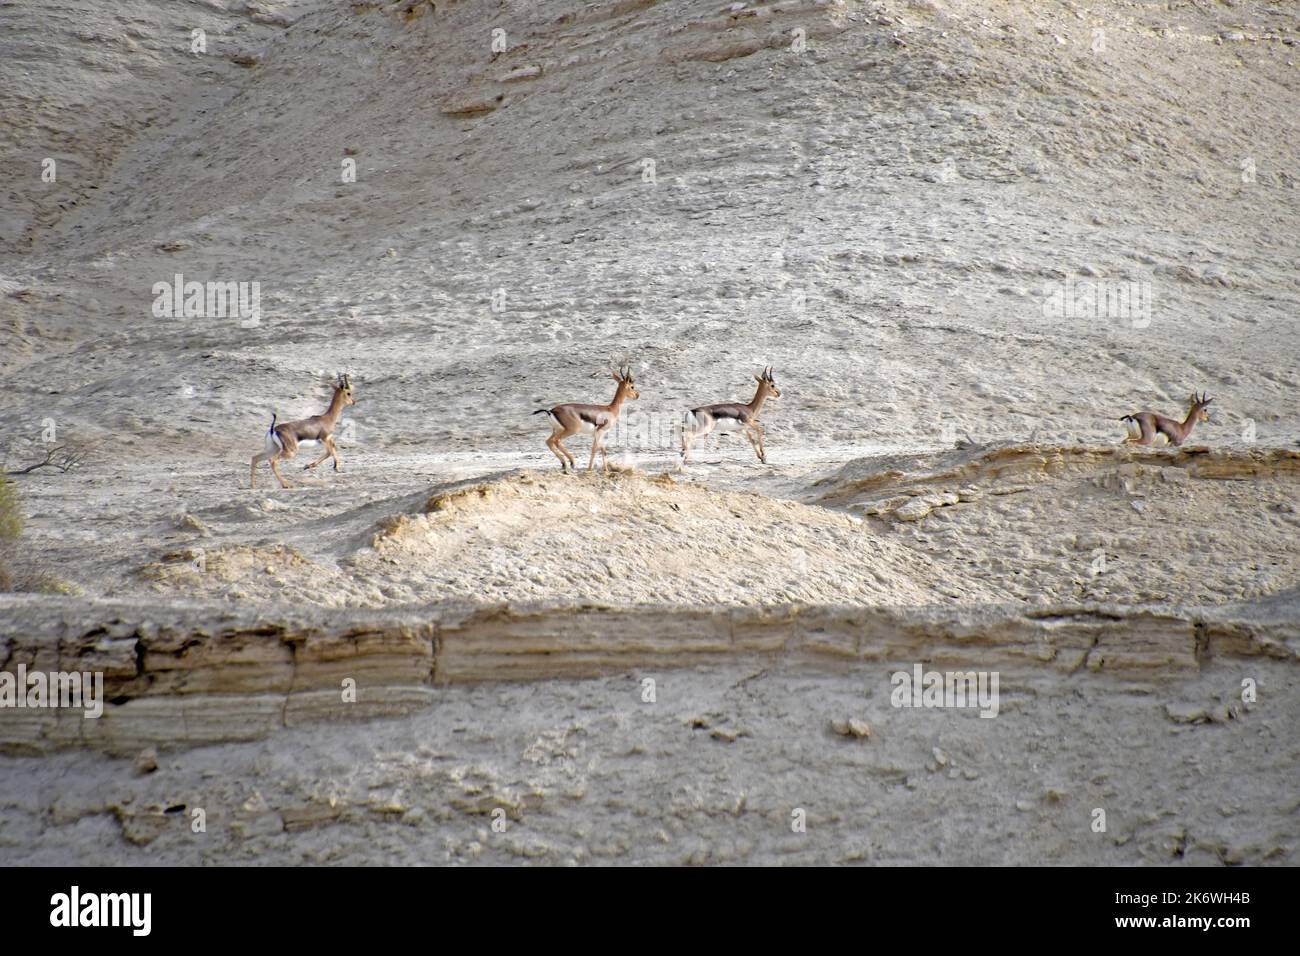 Gazelle group run in the desert Stock Photo